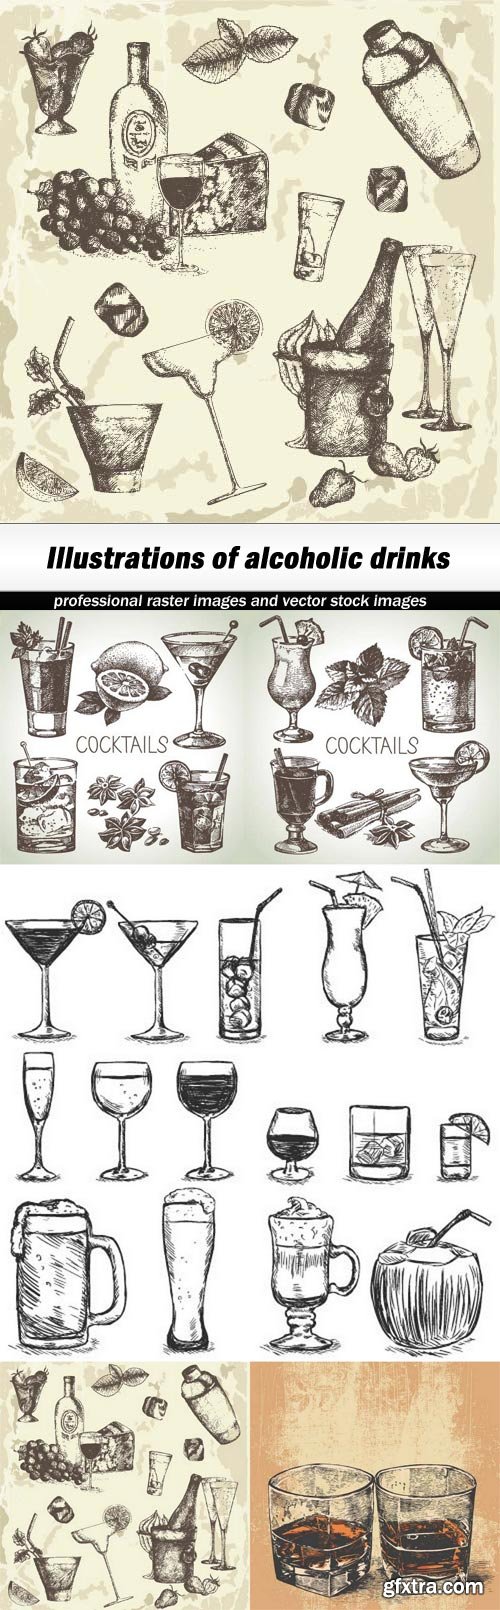 Illustrations of alcoholic drinks